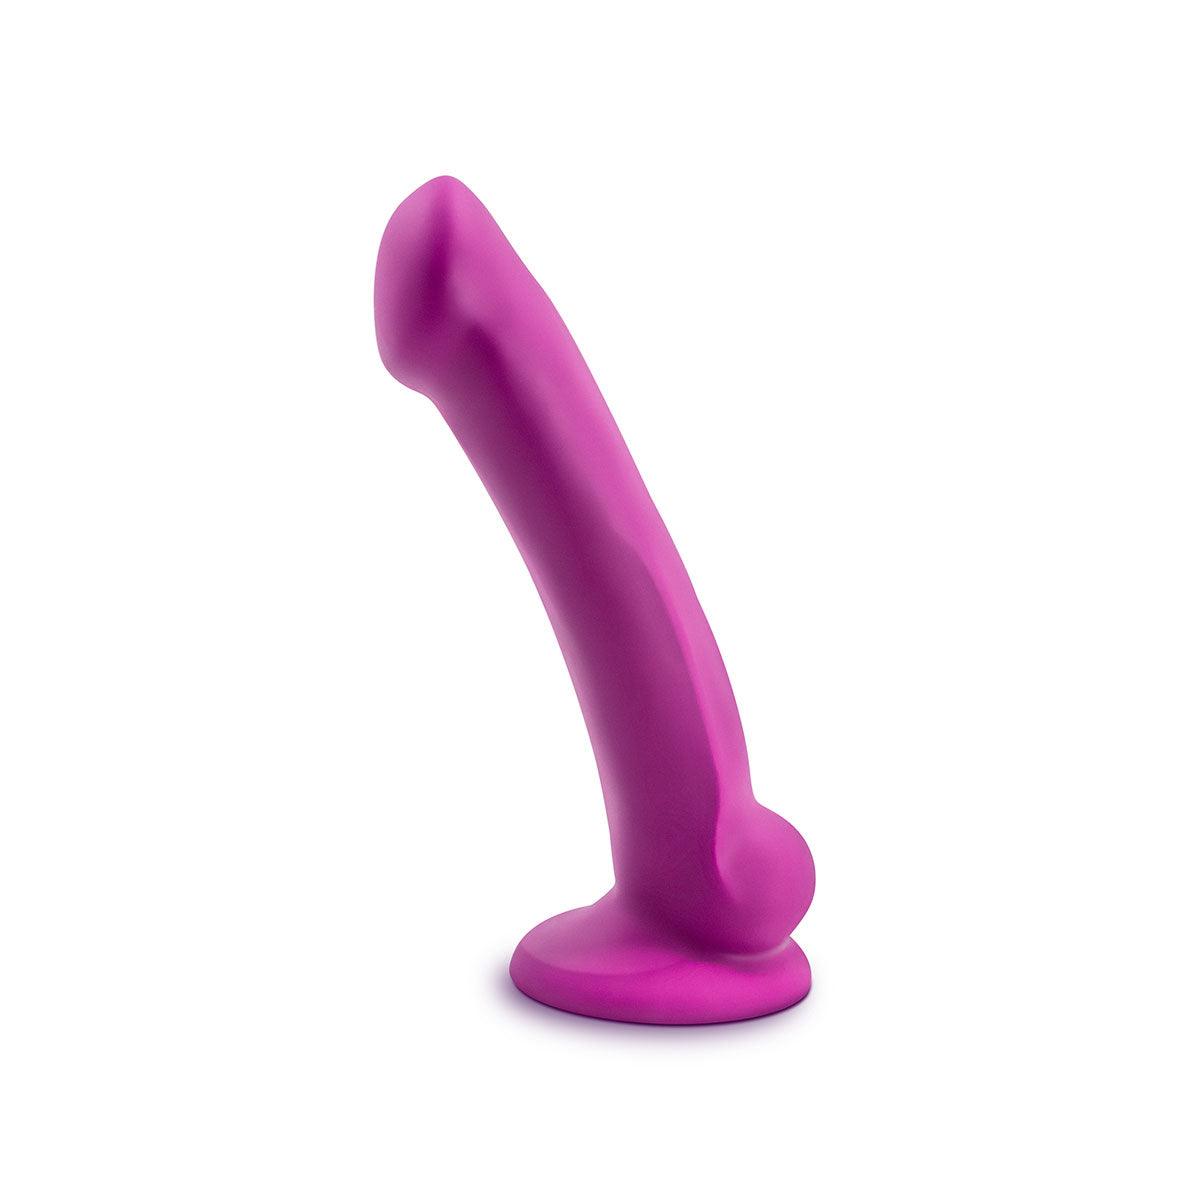 Avant D9 - Ergo MINI Violet - Buy At Luxury Toy X - Free 3-Day Shipping